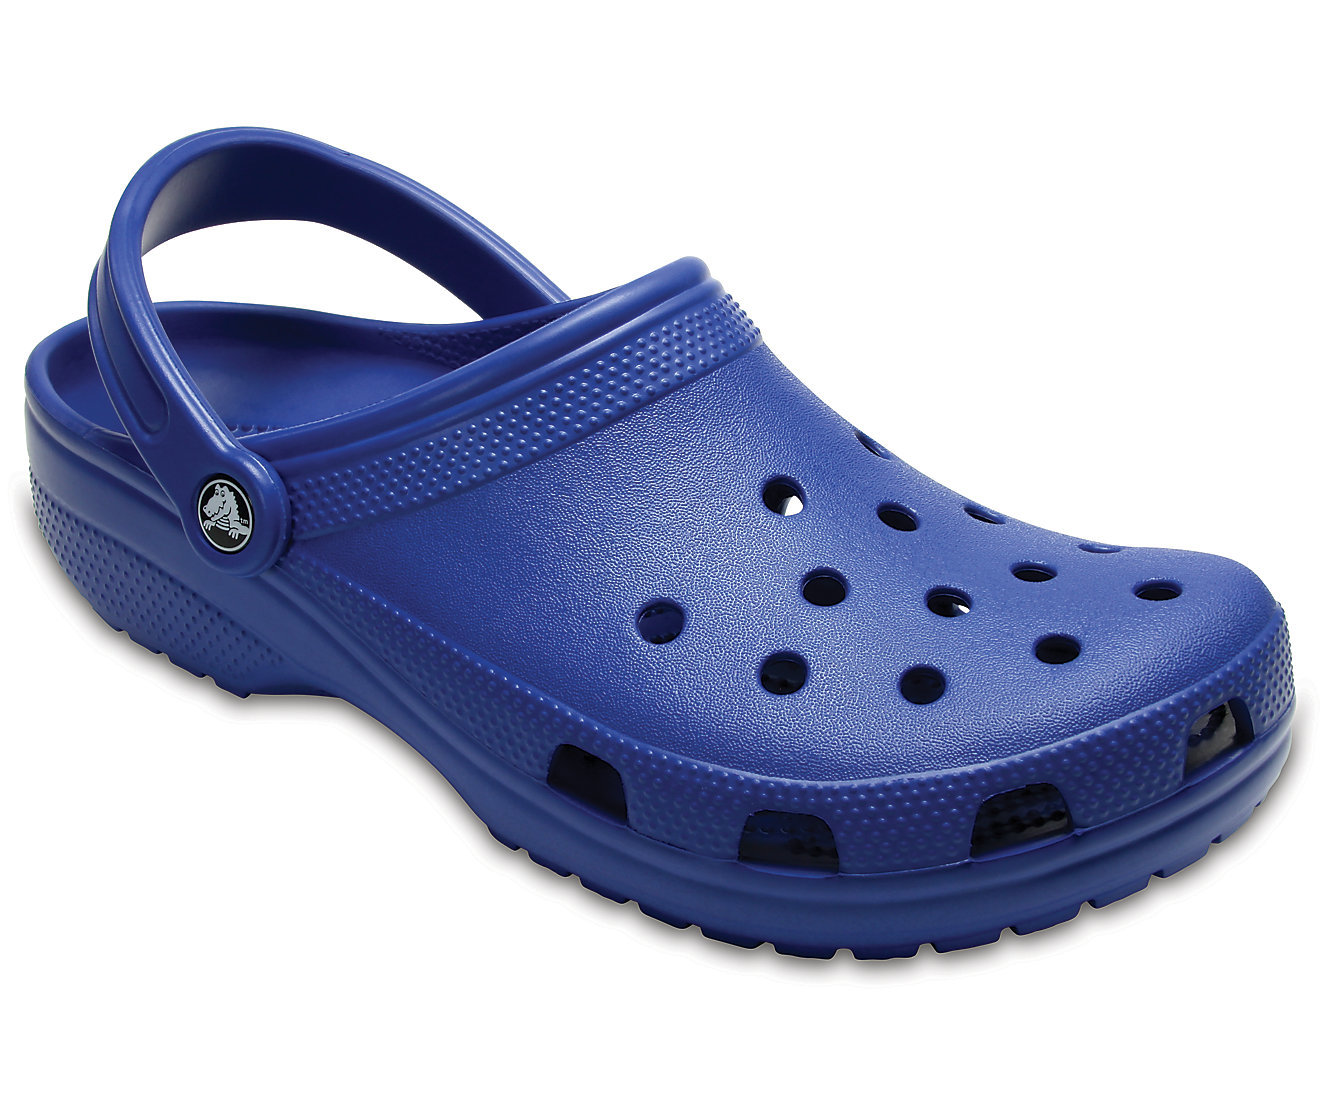 Blue jean crocs